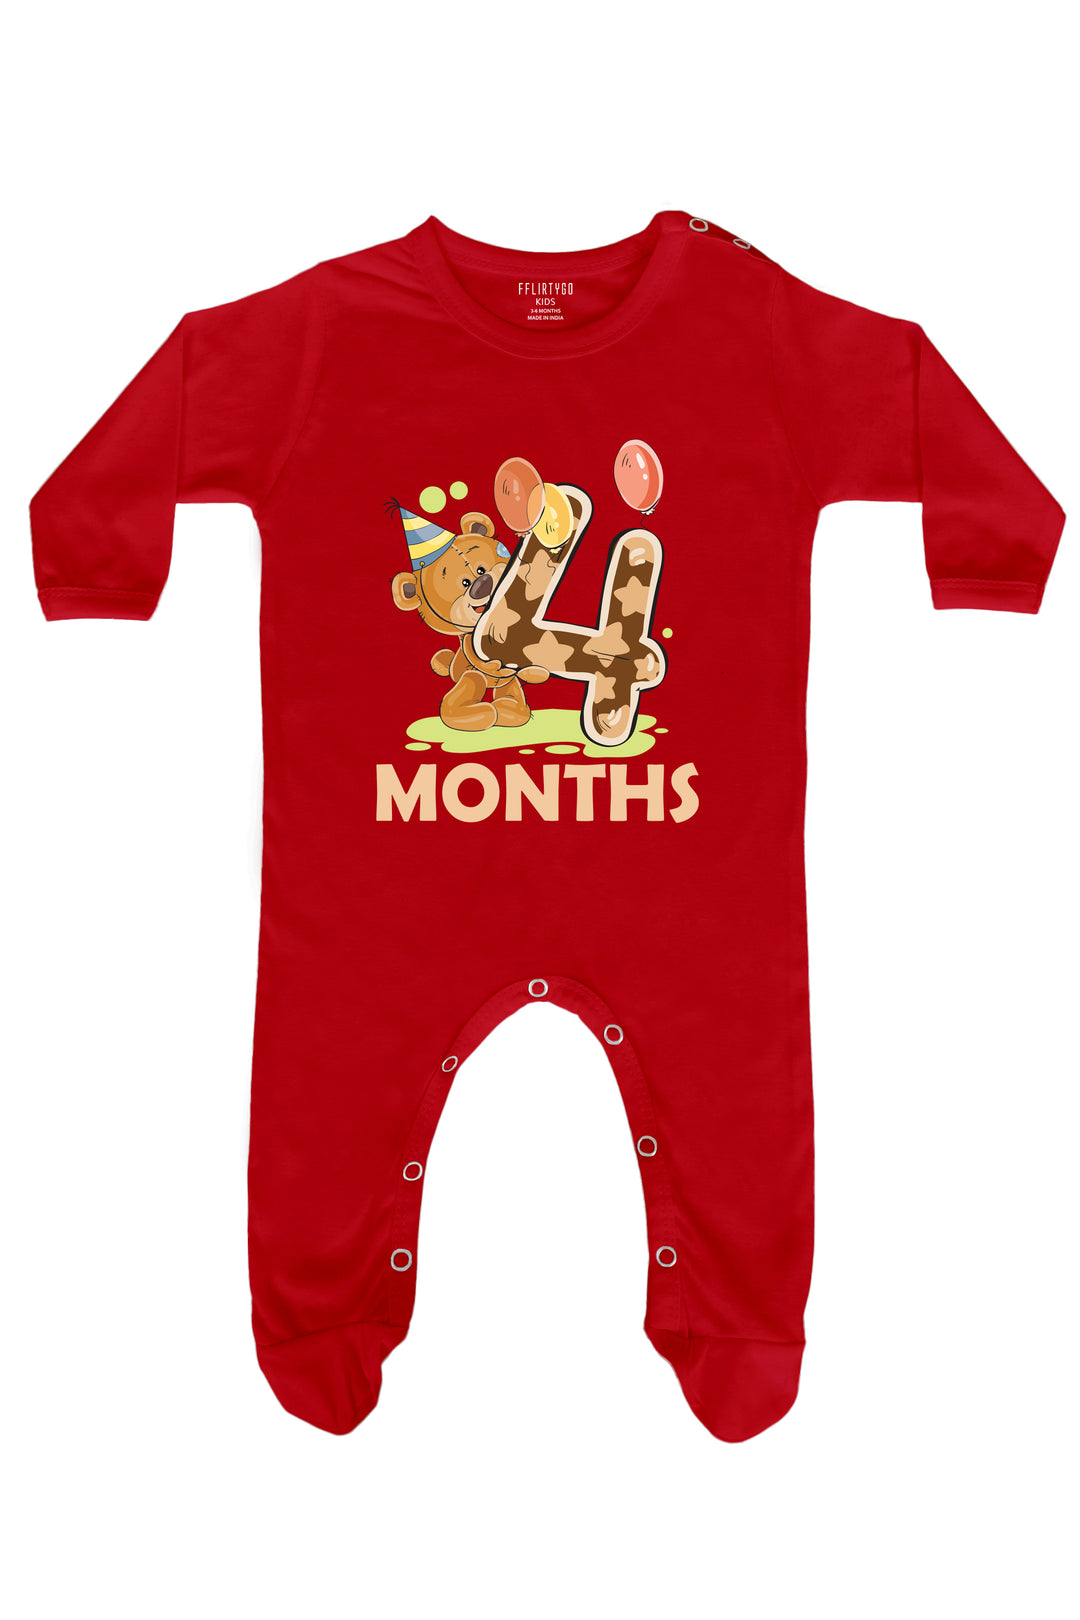 Four Months Milestone Baby Romper | Onesies